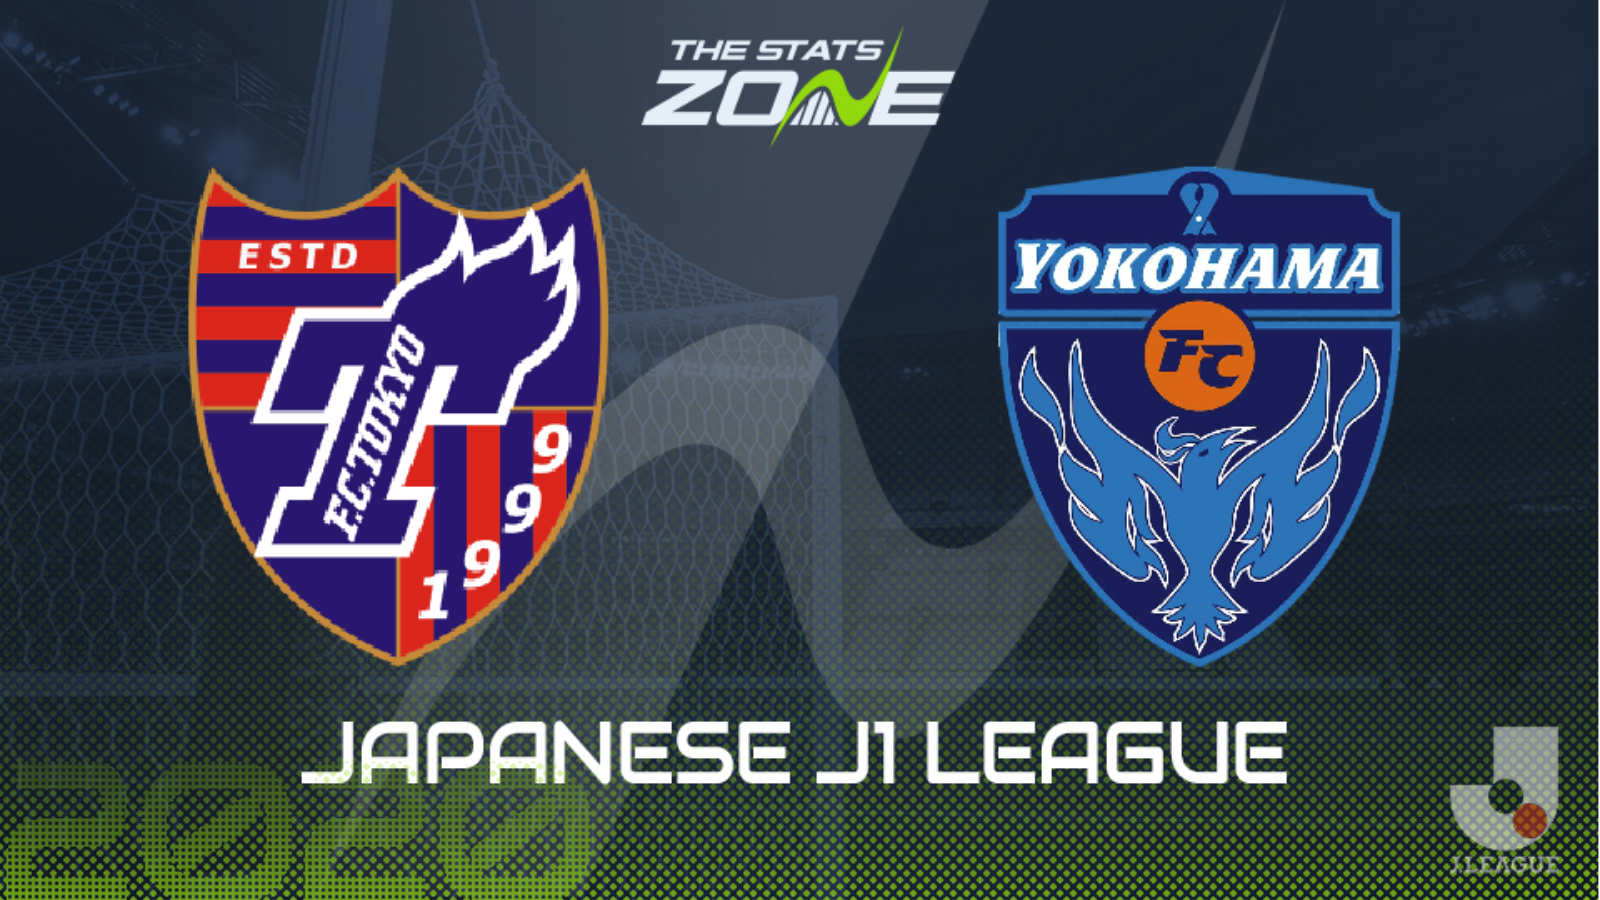 2020 Japanese J1 League Fc Tokyo Vs Yokohama Preview Prediction The Stats Zone